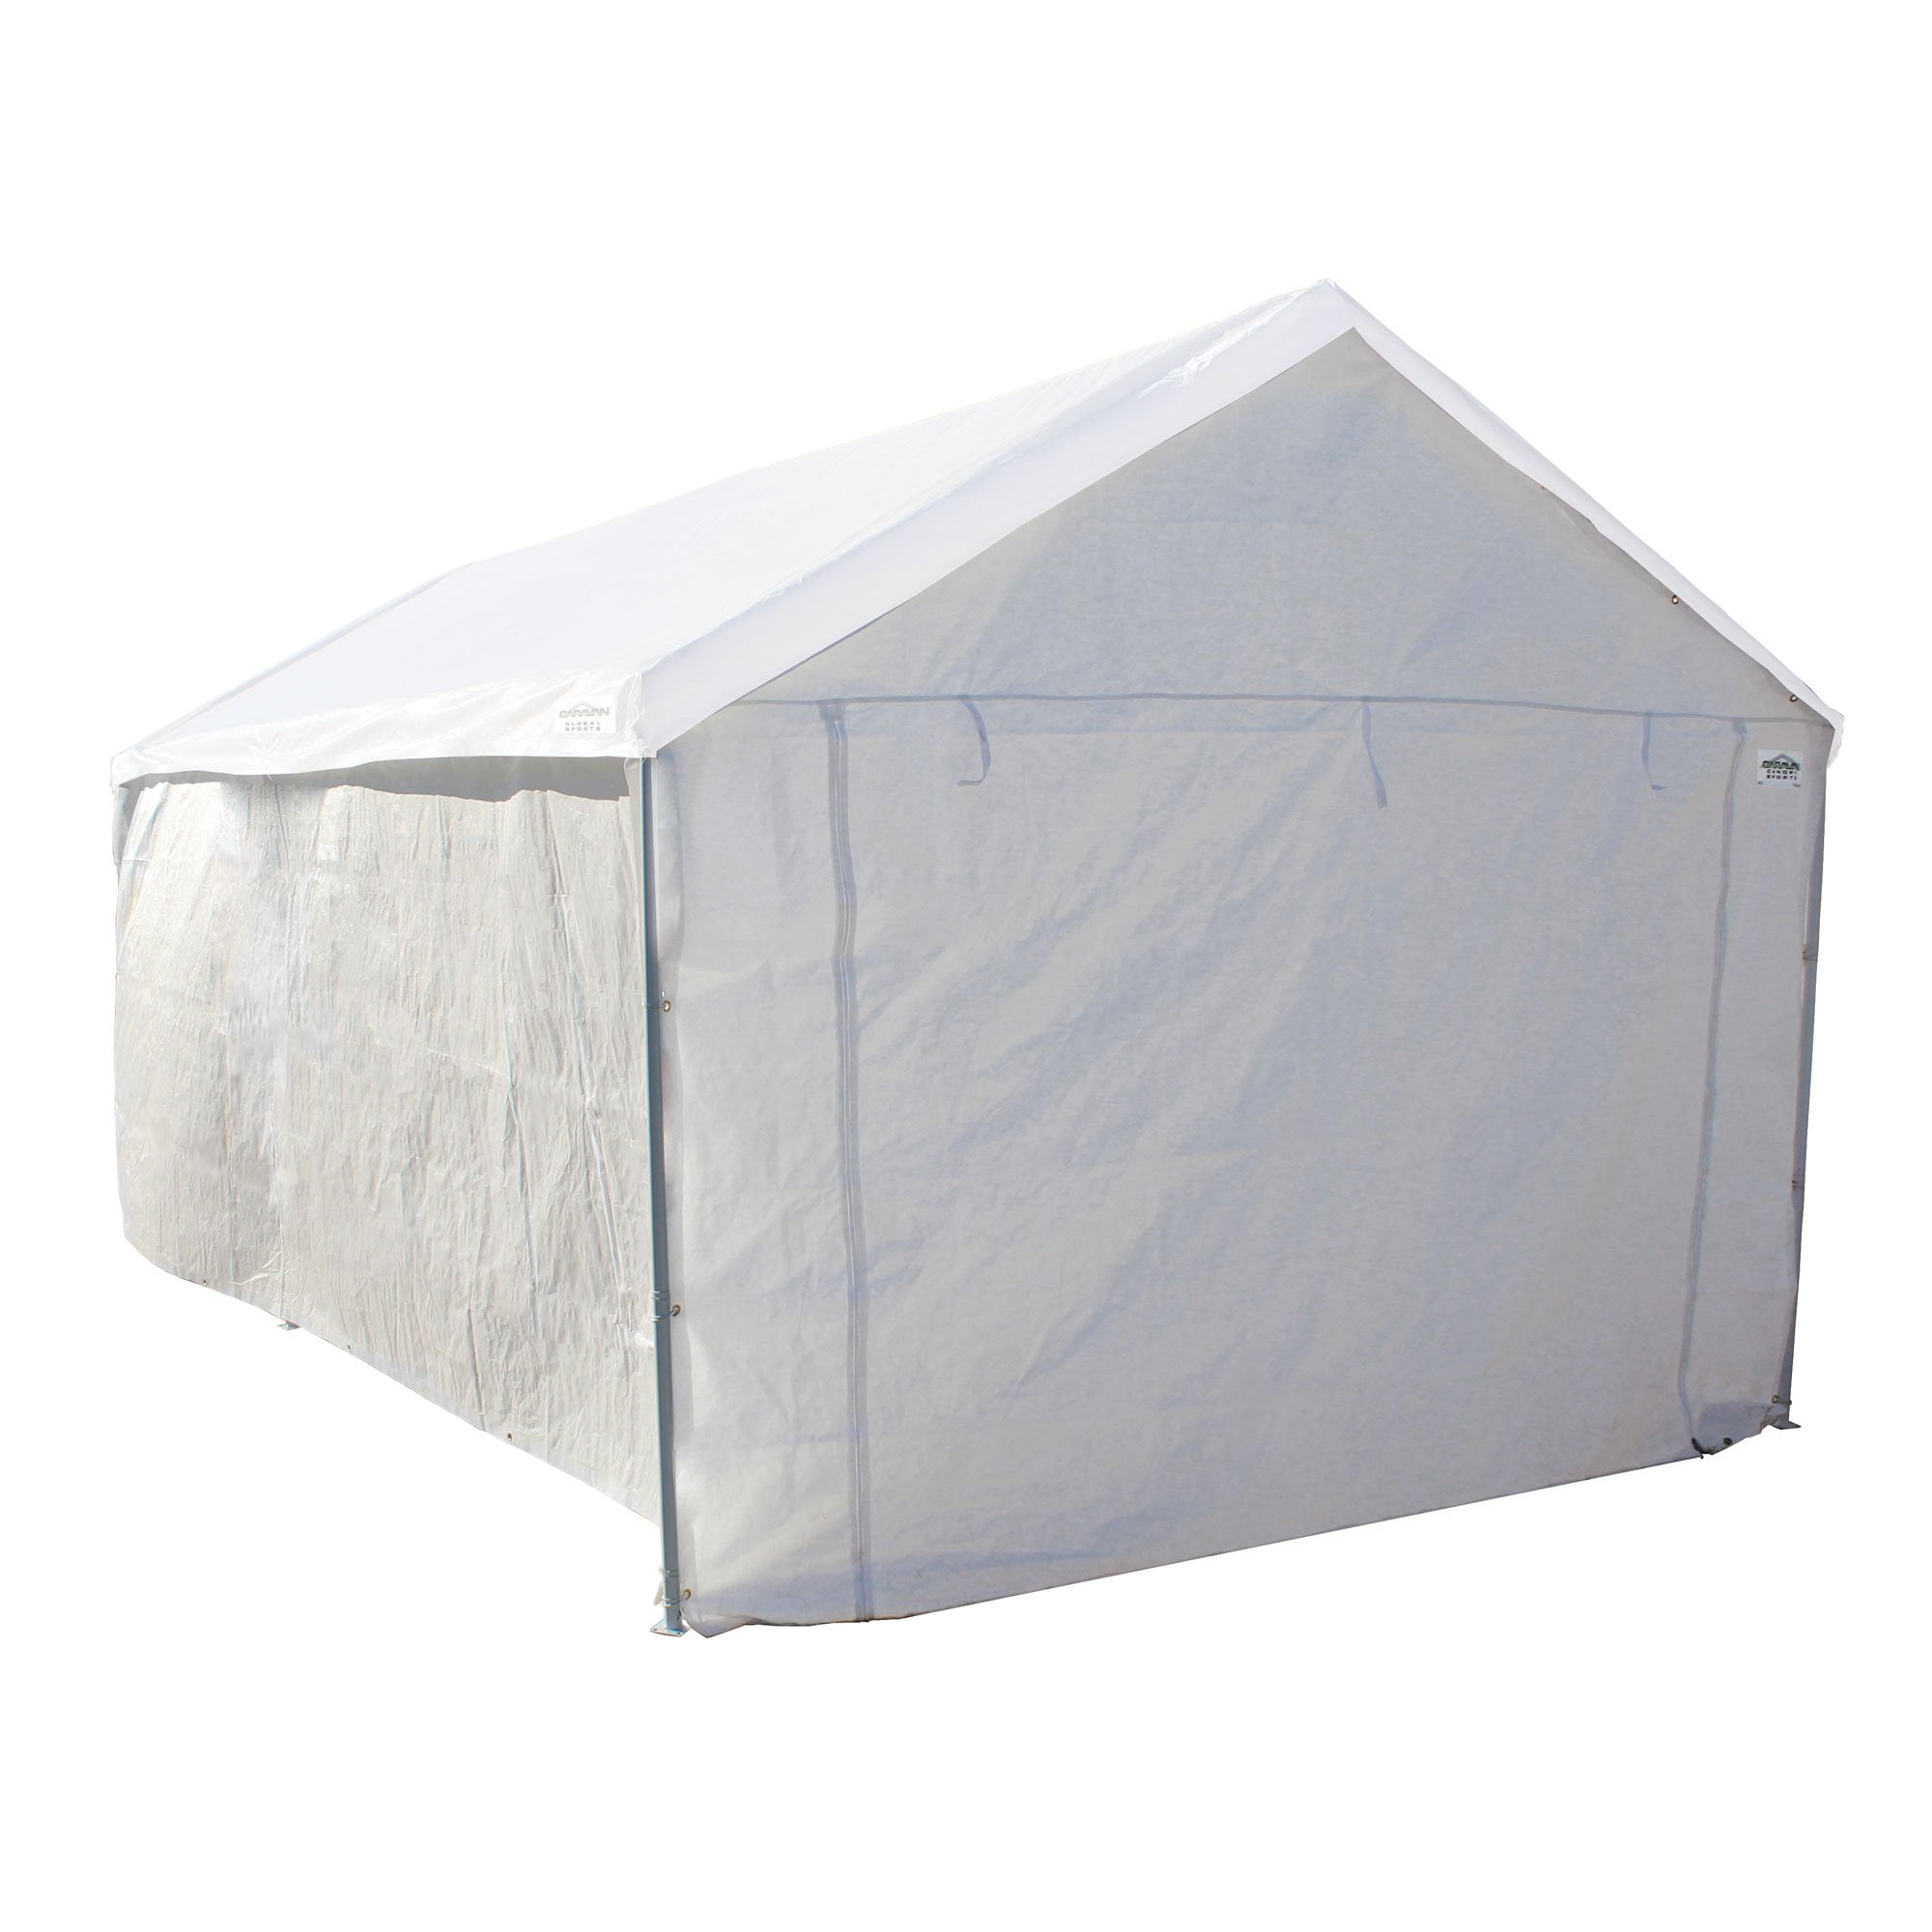 Caravan Canopy Sports 10'x20' Domain Carport Garage Sidewall/Enclosure Kit Tent 